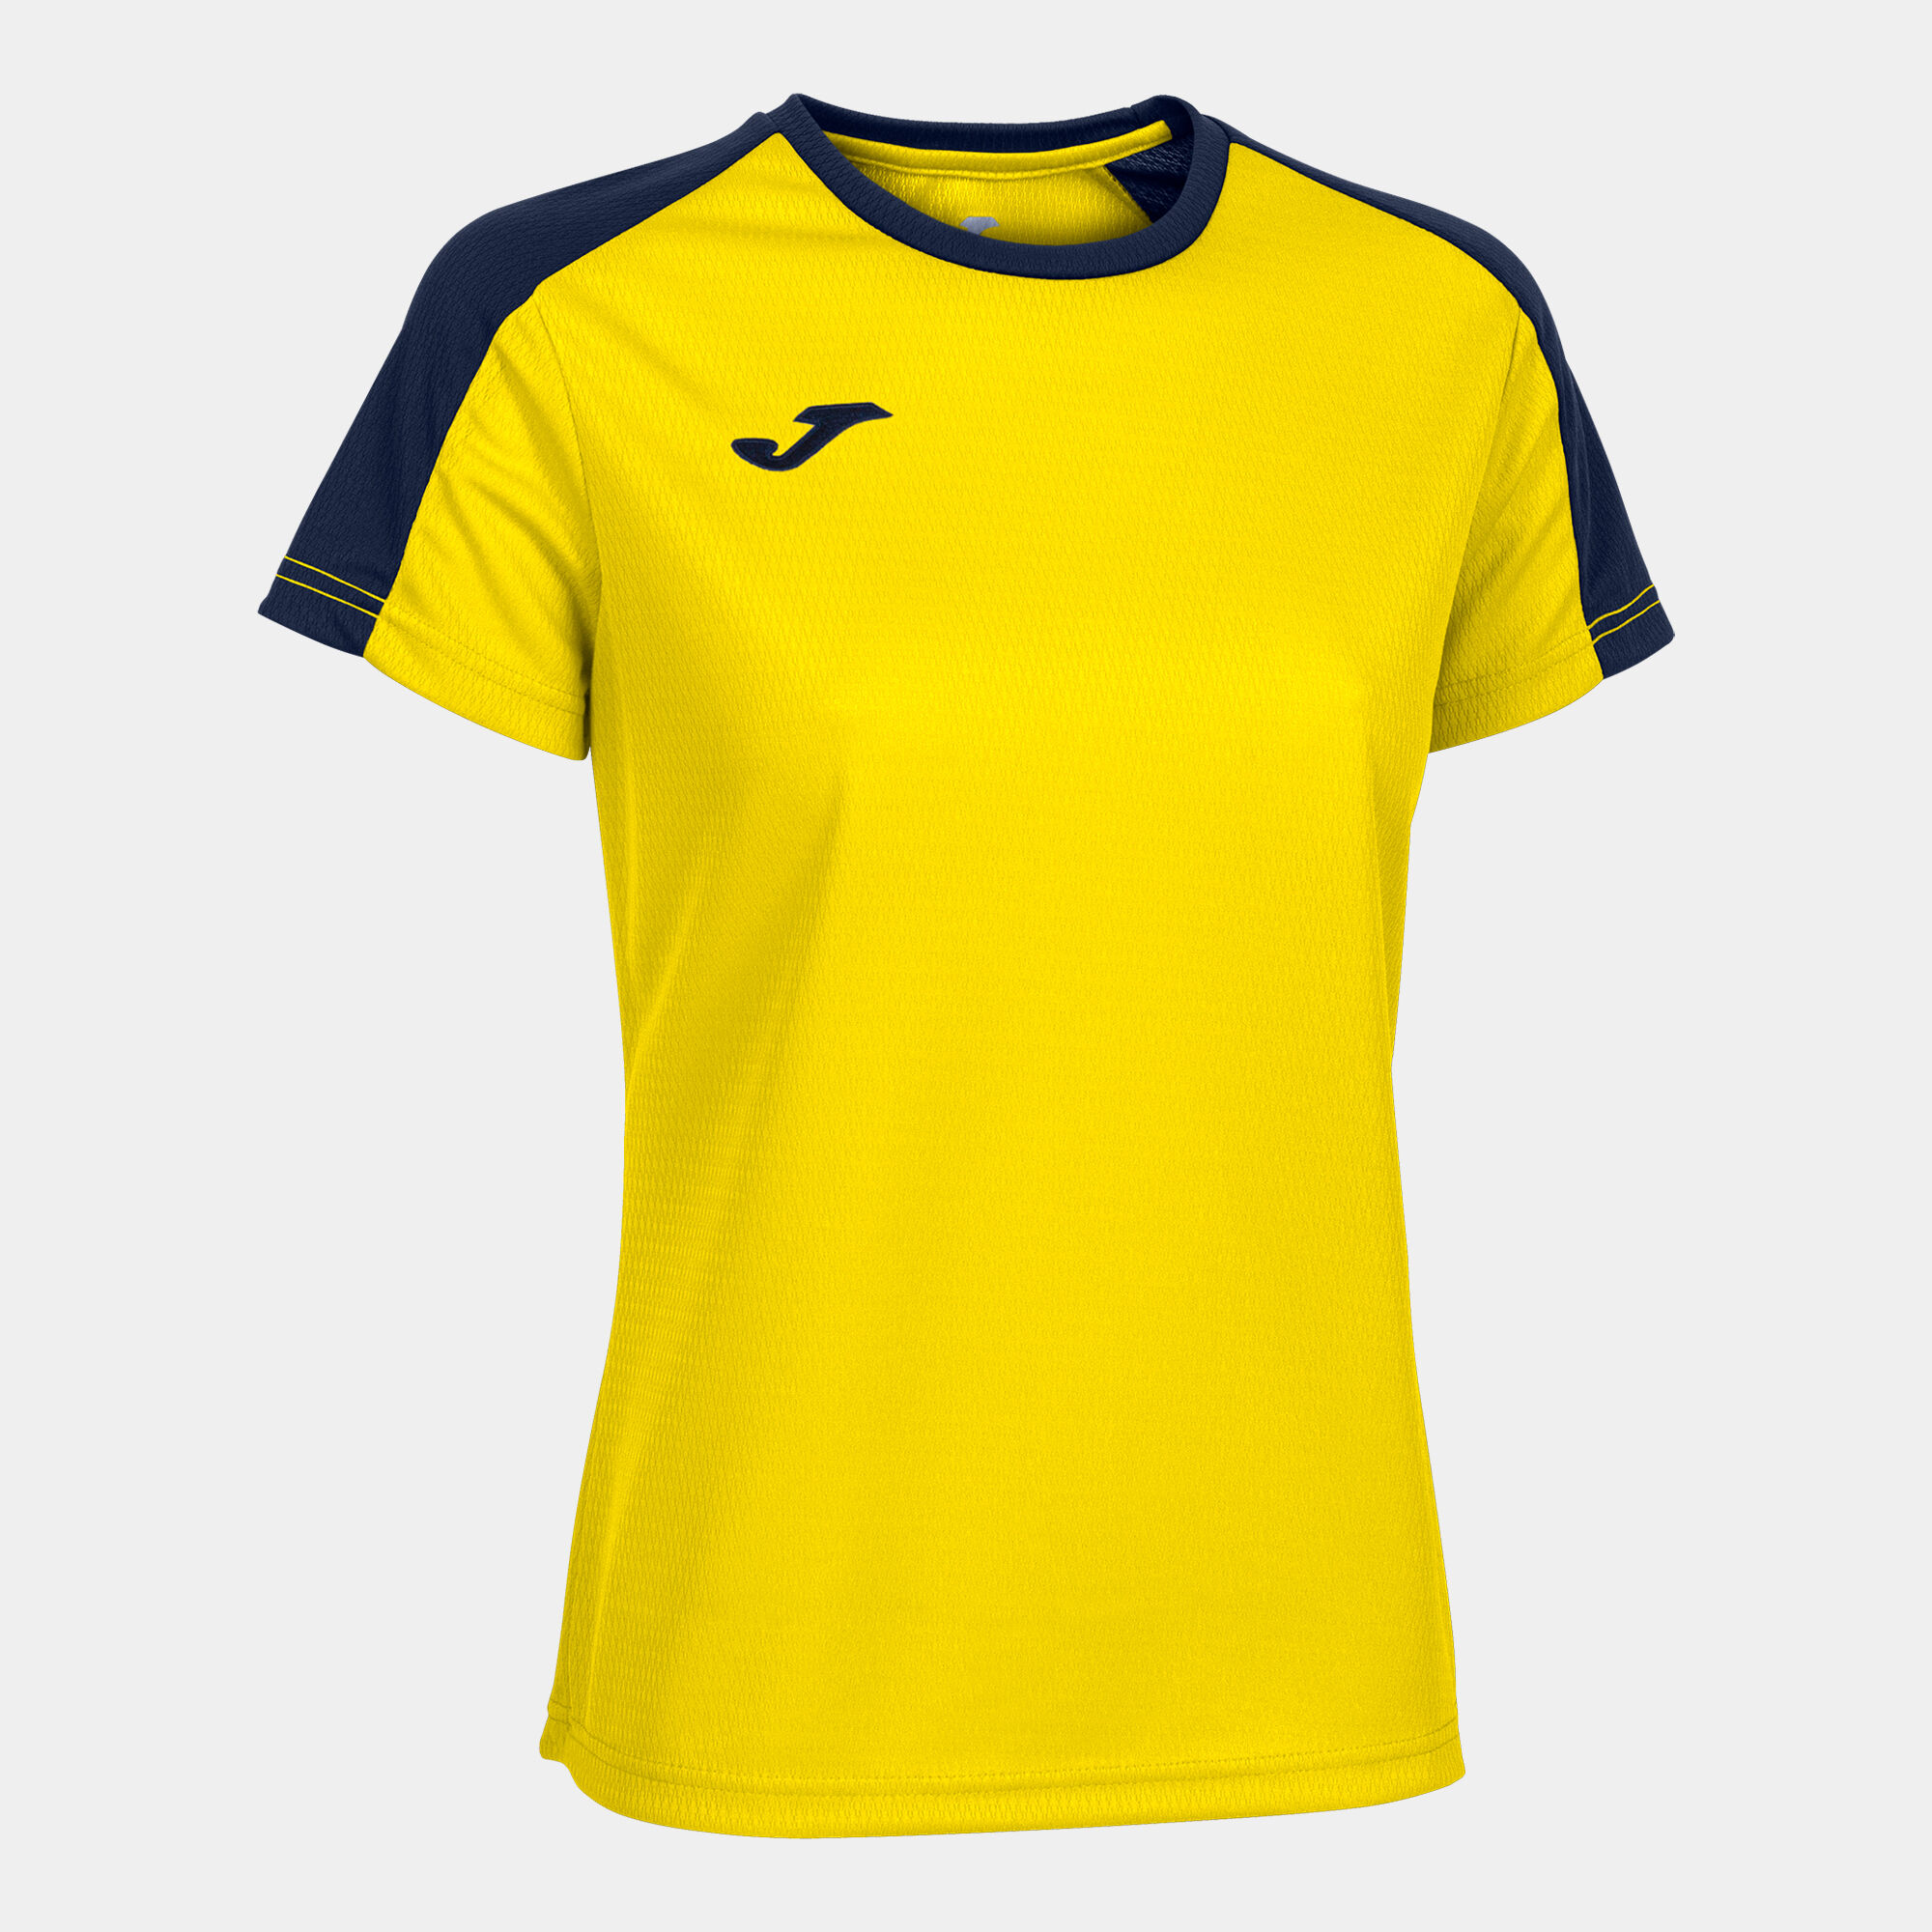 Camiseta manga corta mujer Eco Championship amarillo marino